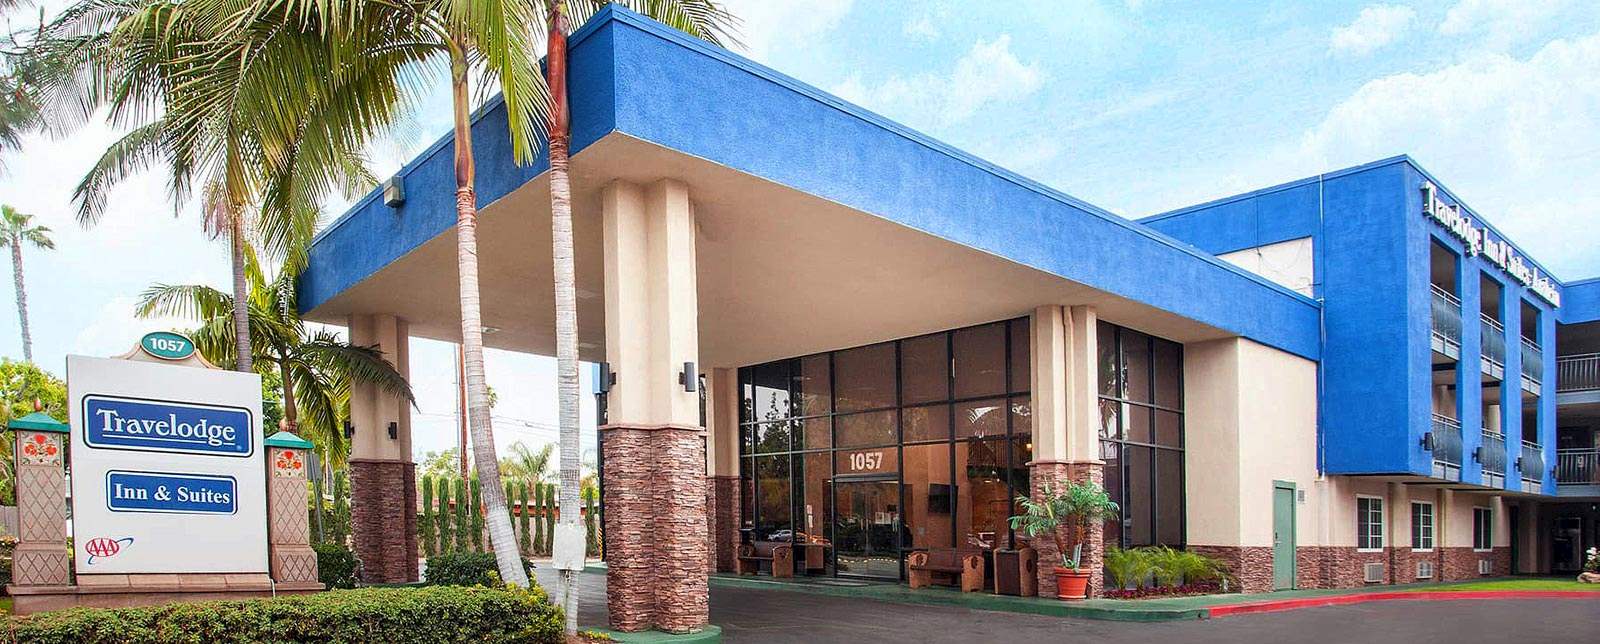 Travelodge Anaheim Inn Suites California1 Top ?version=3302022192307